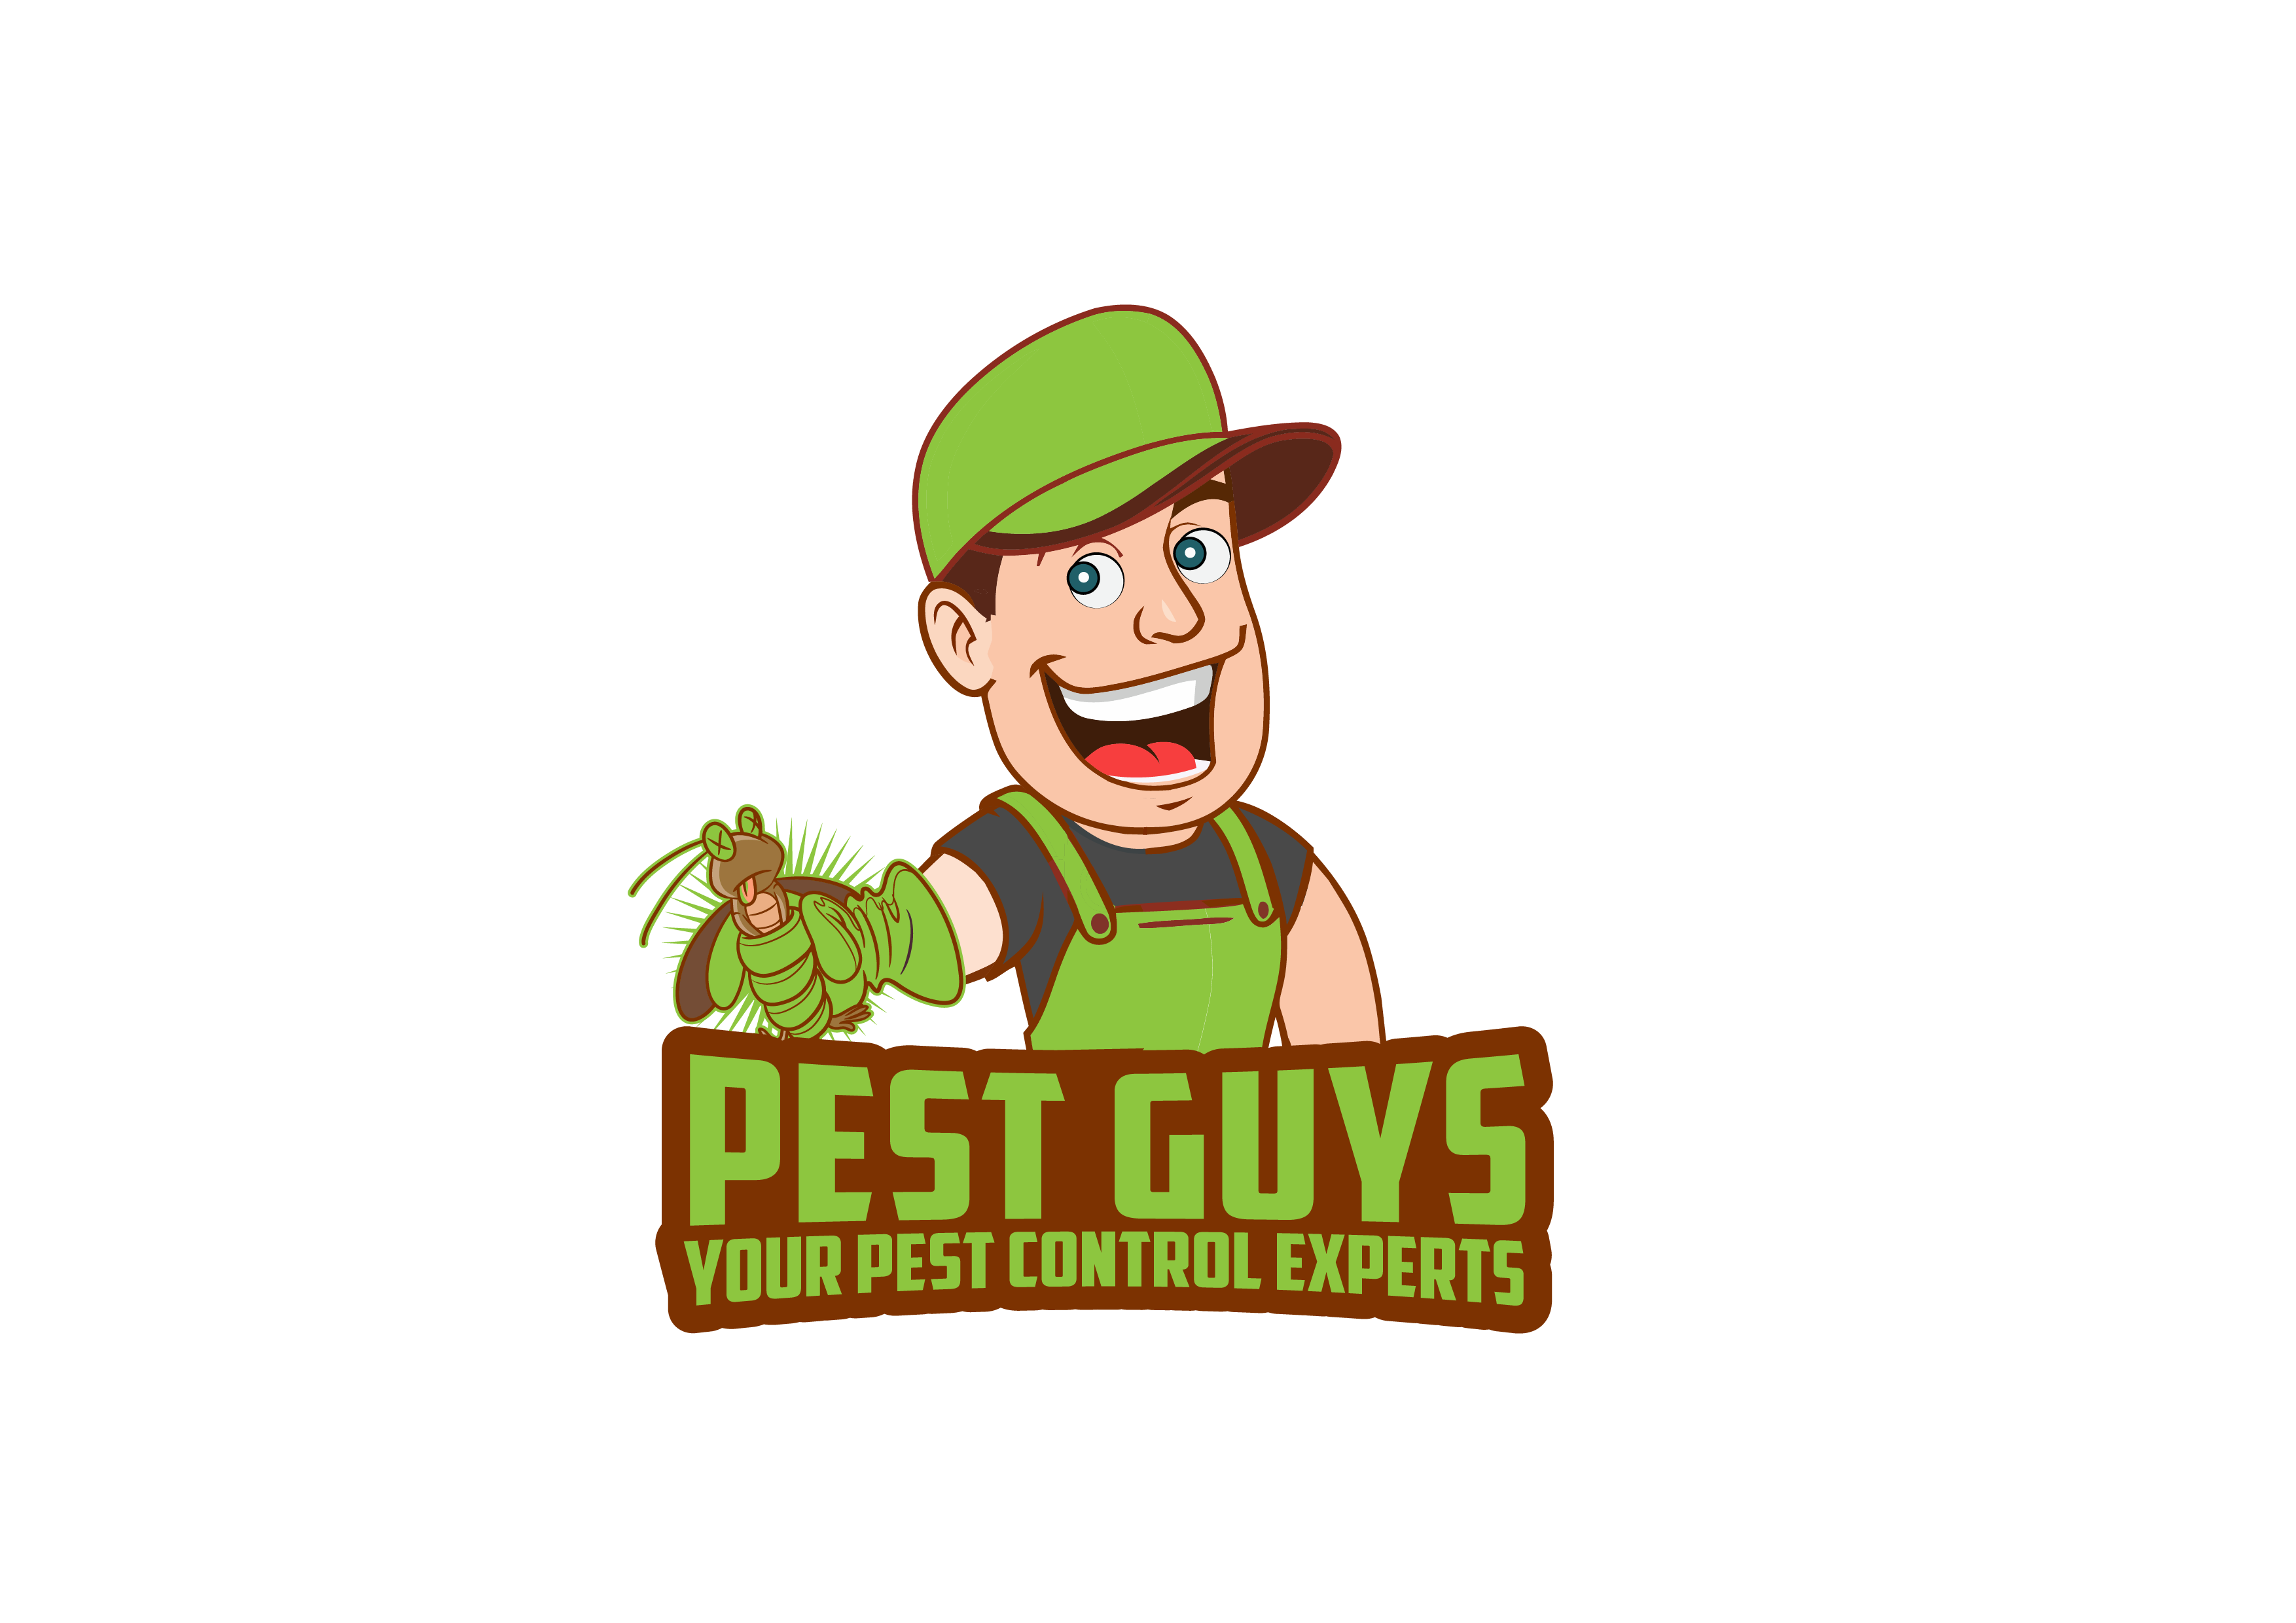 Pest Guys Your Pest Control Experts